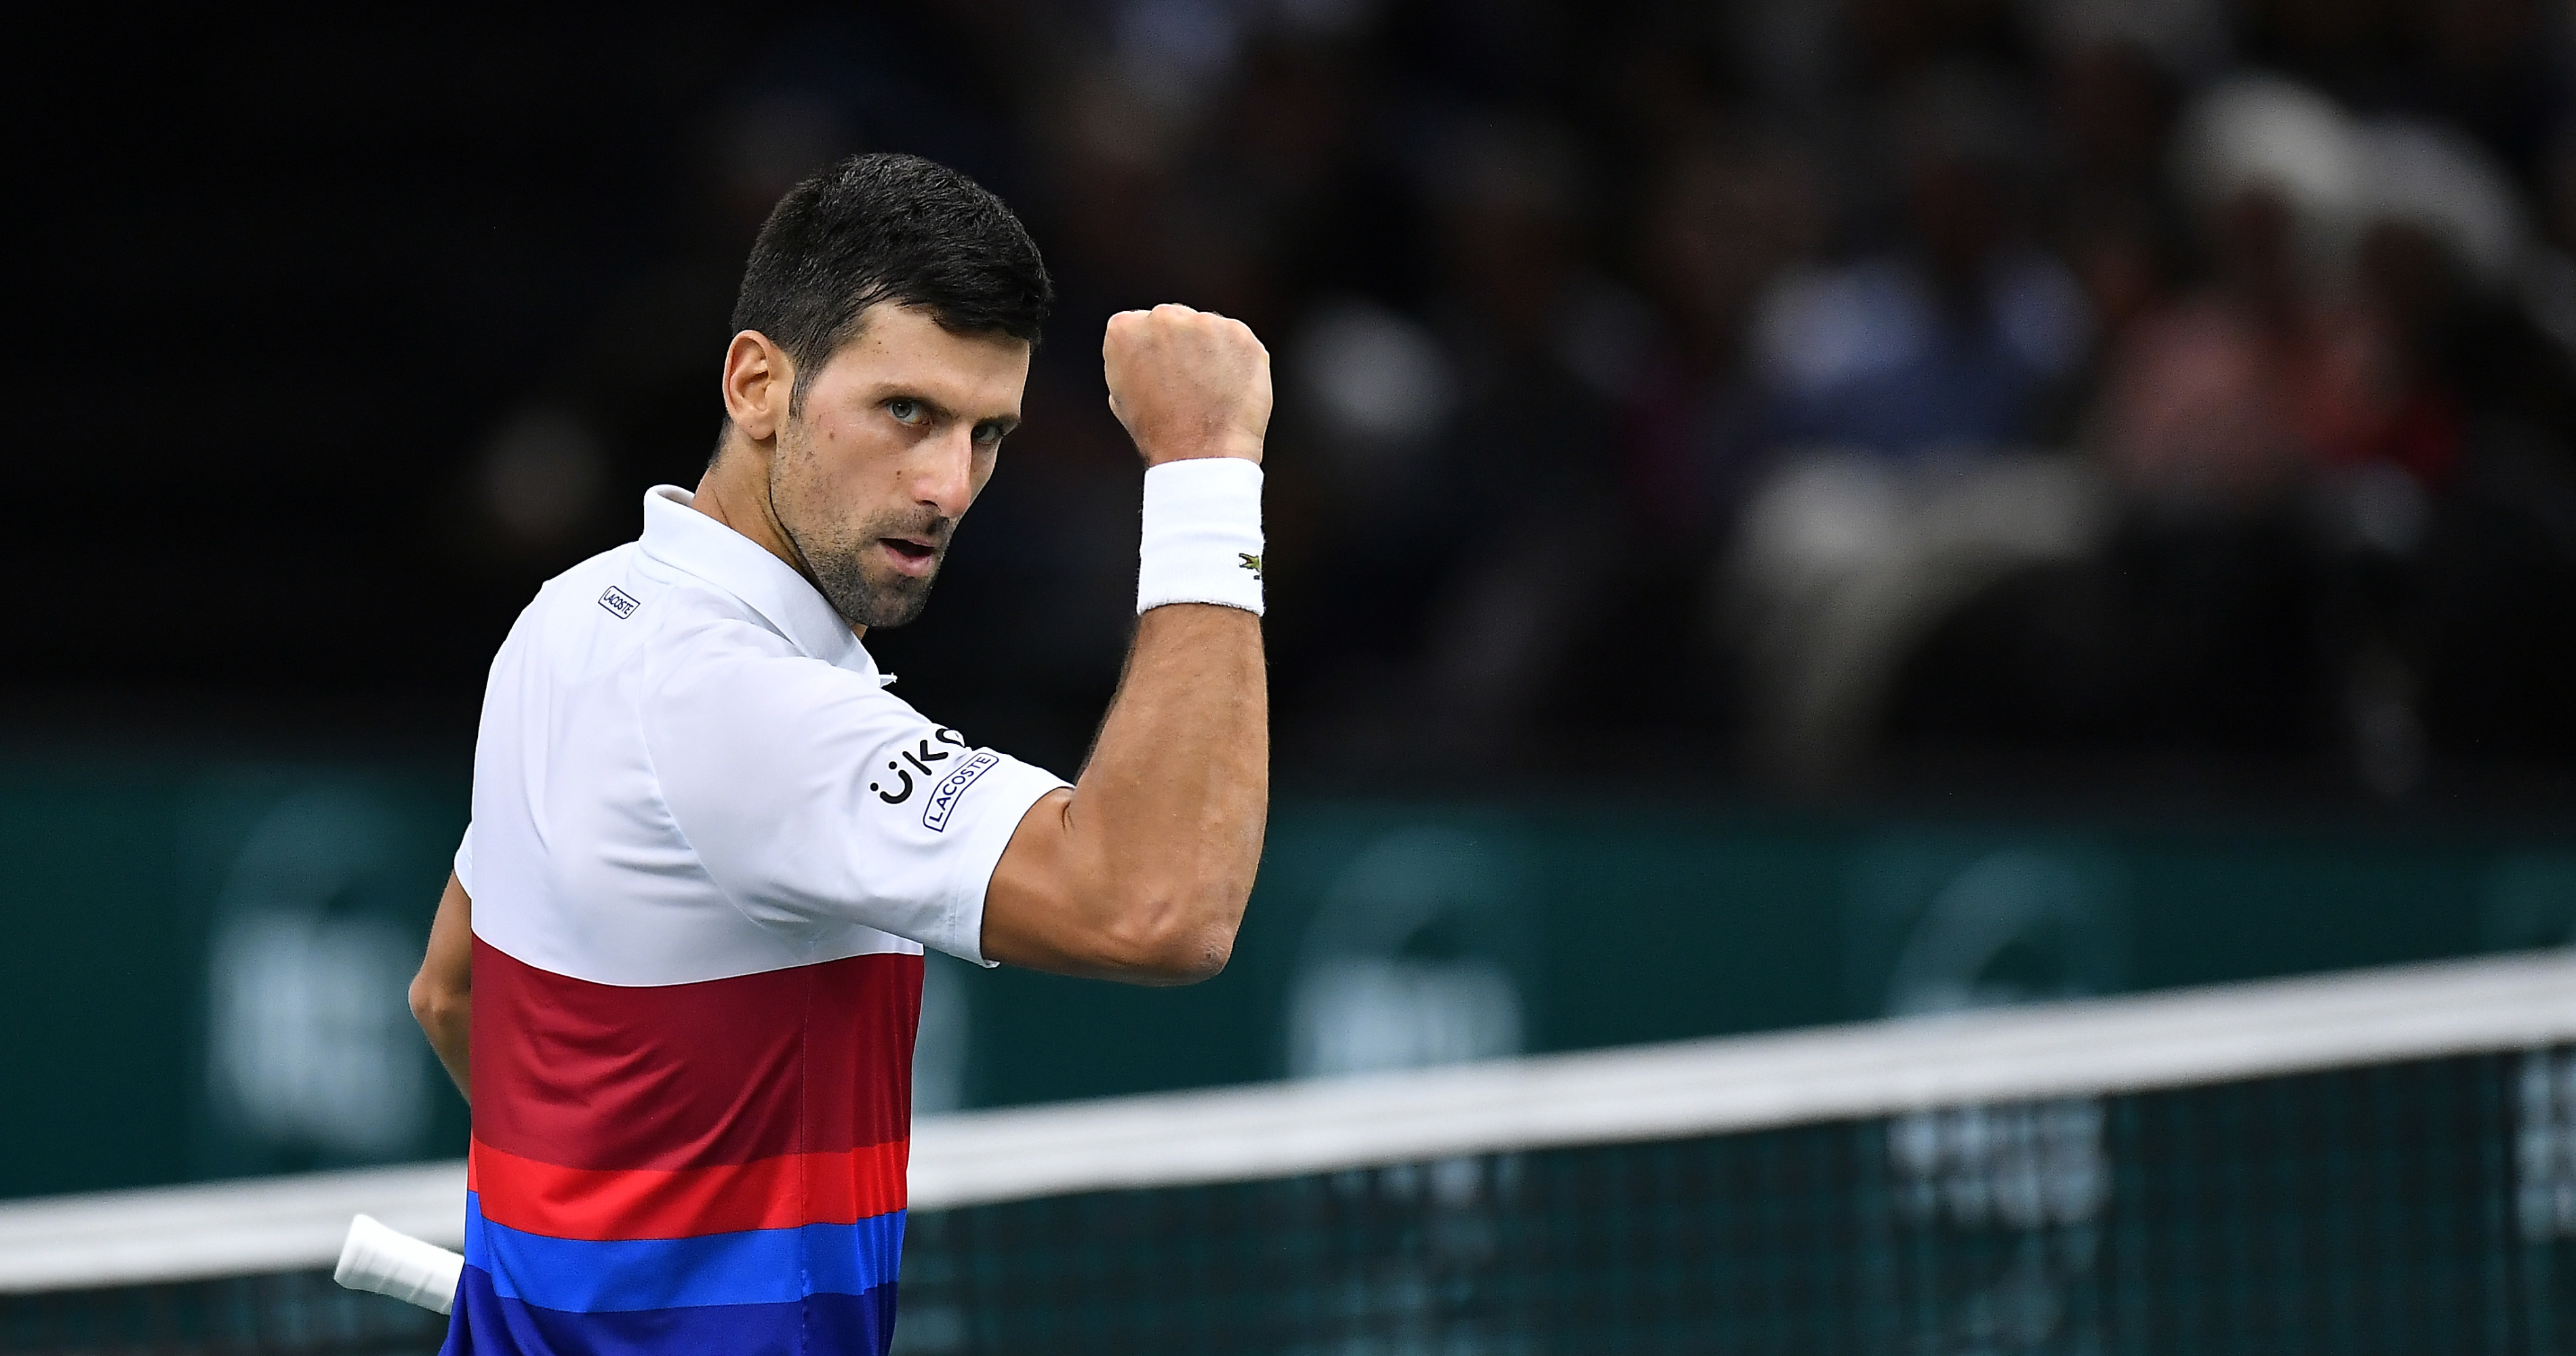 Paris Masters 2021 Novak Djokovic's Quarterfinal Win Highlights Friday